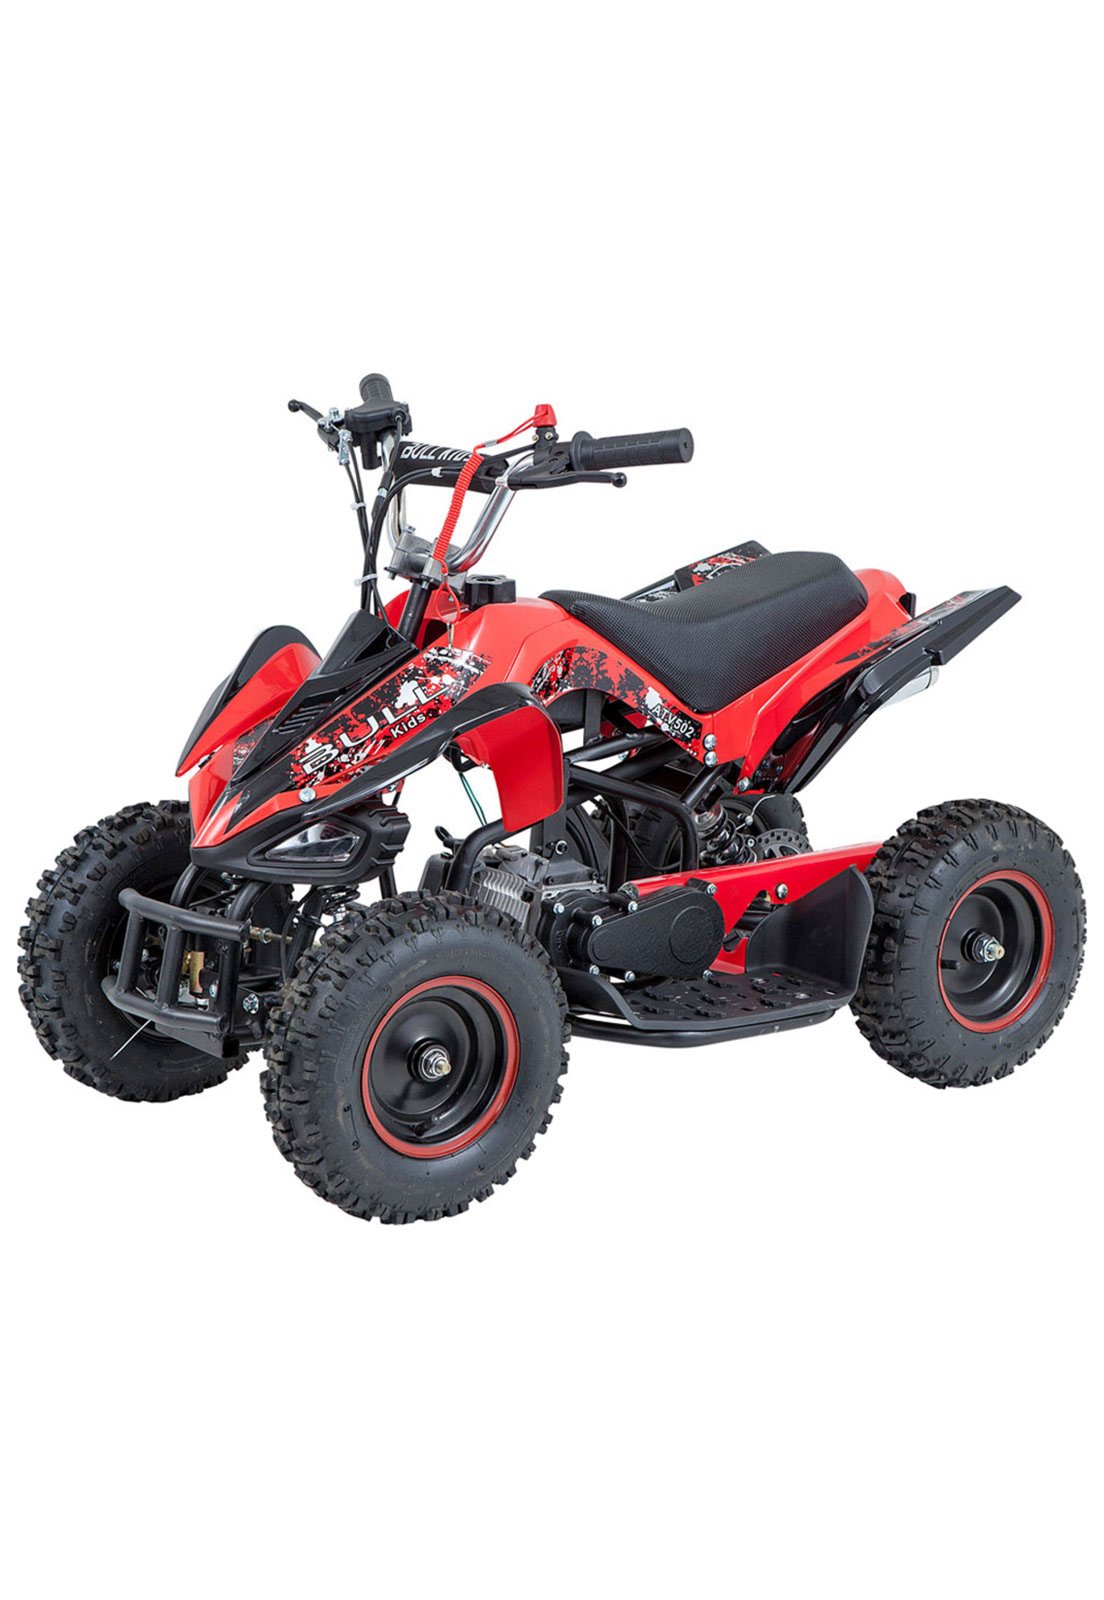 Motocicleta infantil mini moto cross bull motors vermelha bk db08 49cc